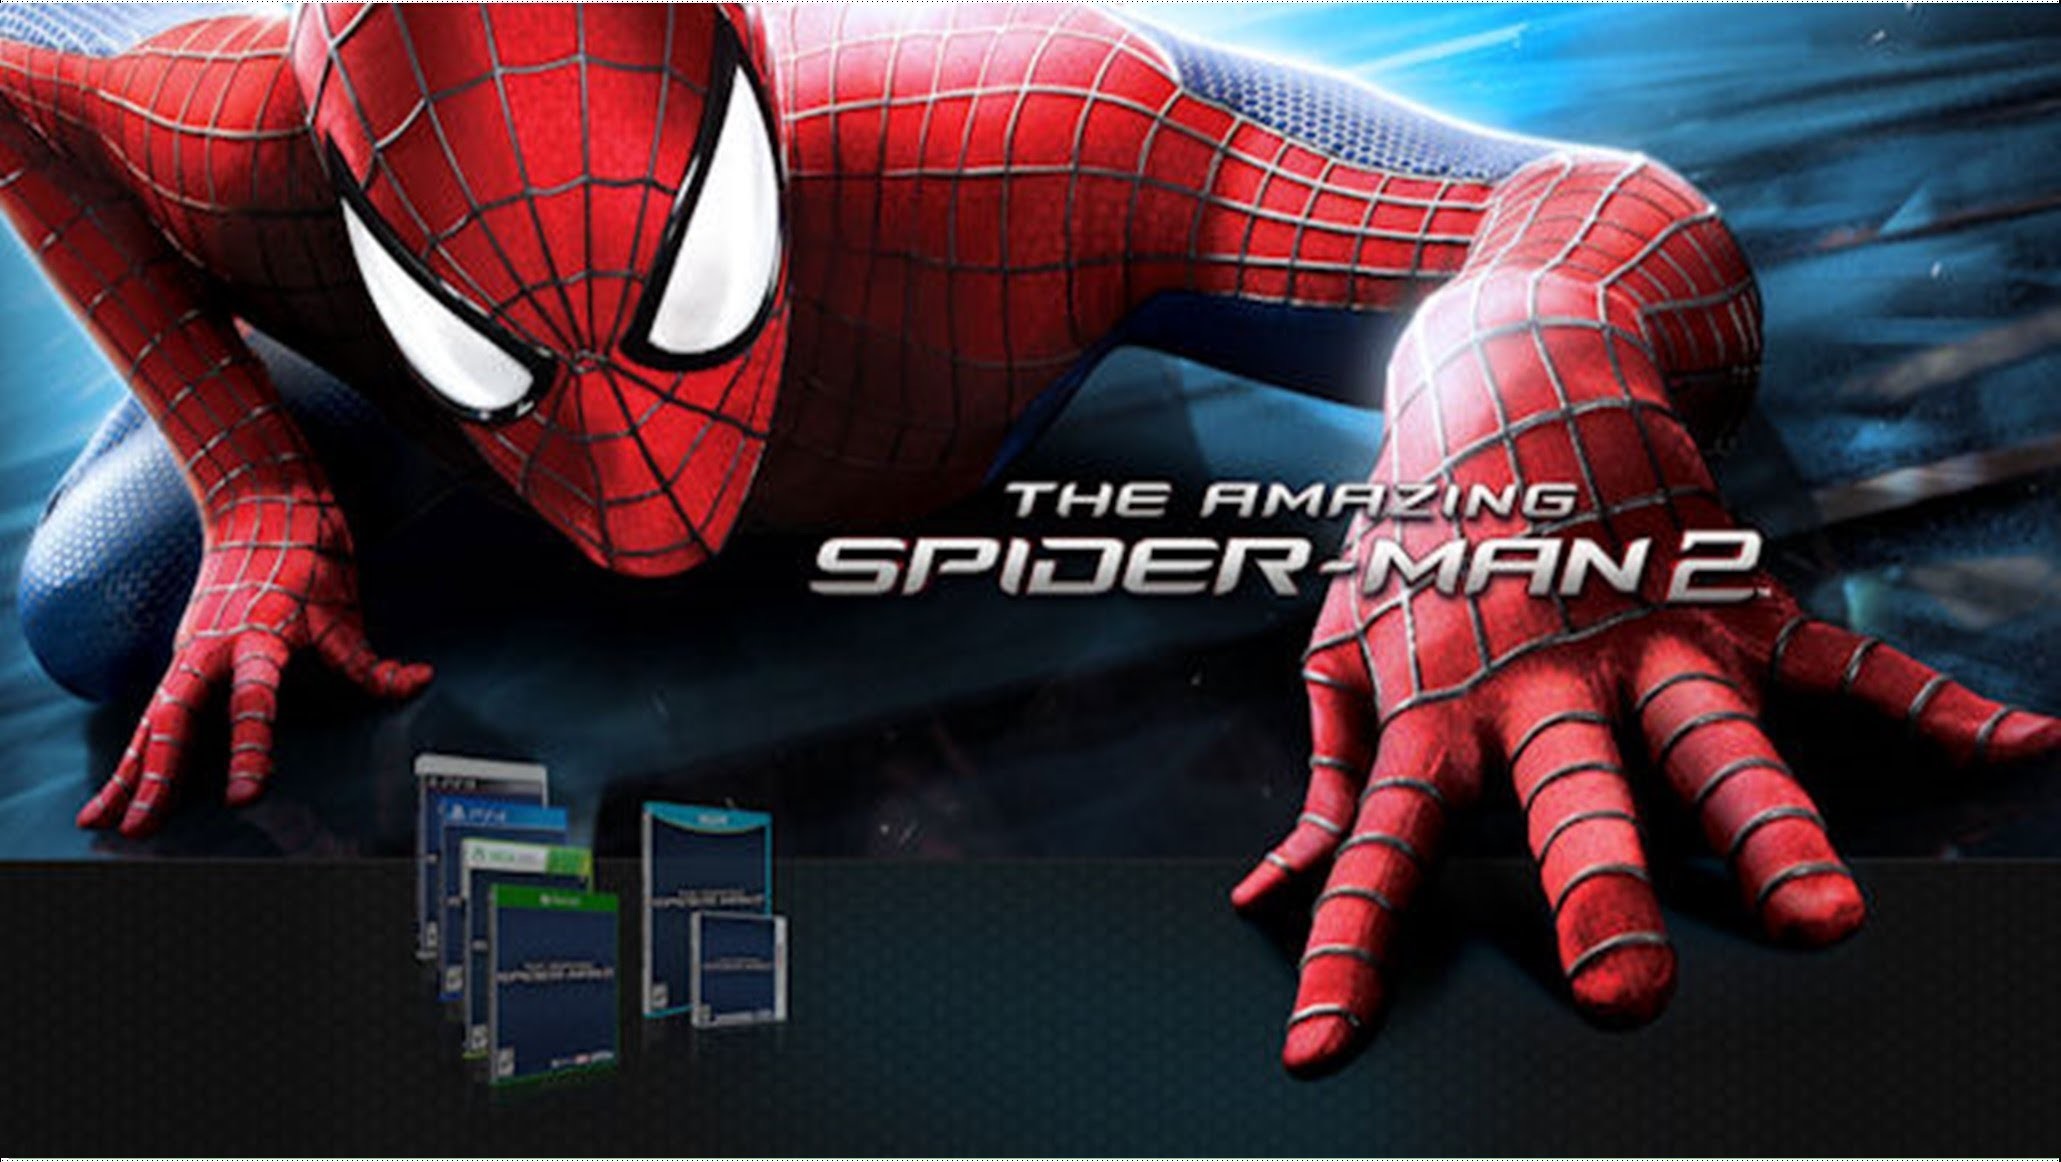 The amazing spider man 2 wallpaper hd 1080p  o